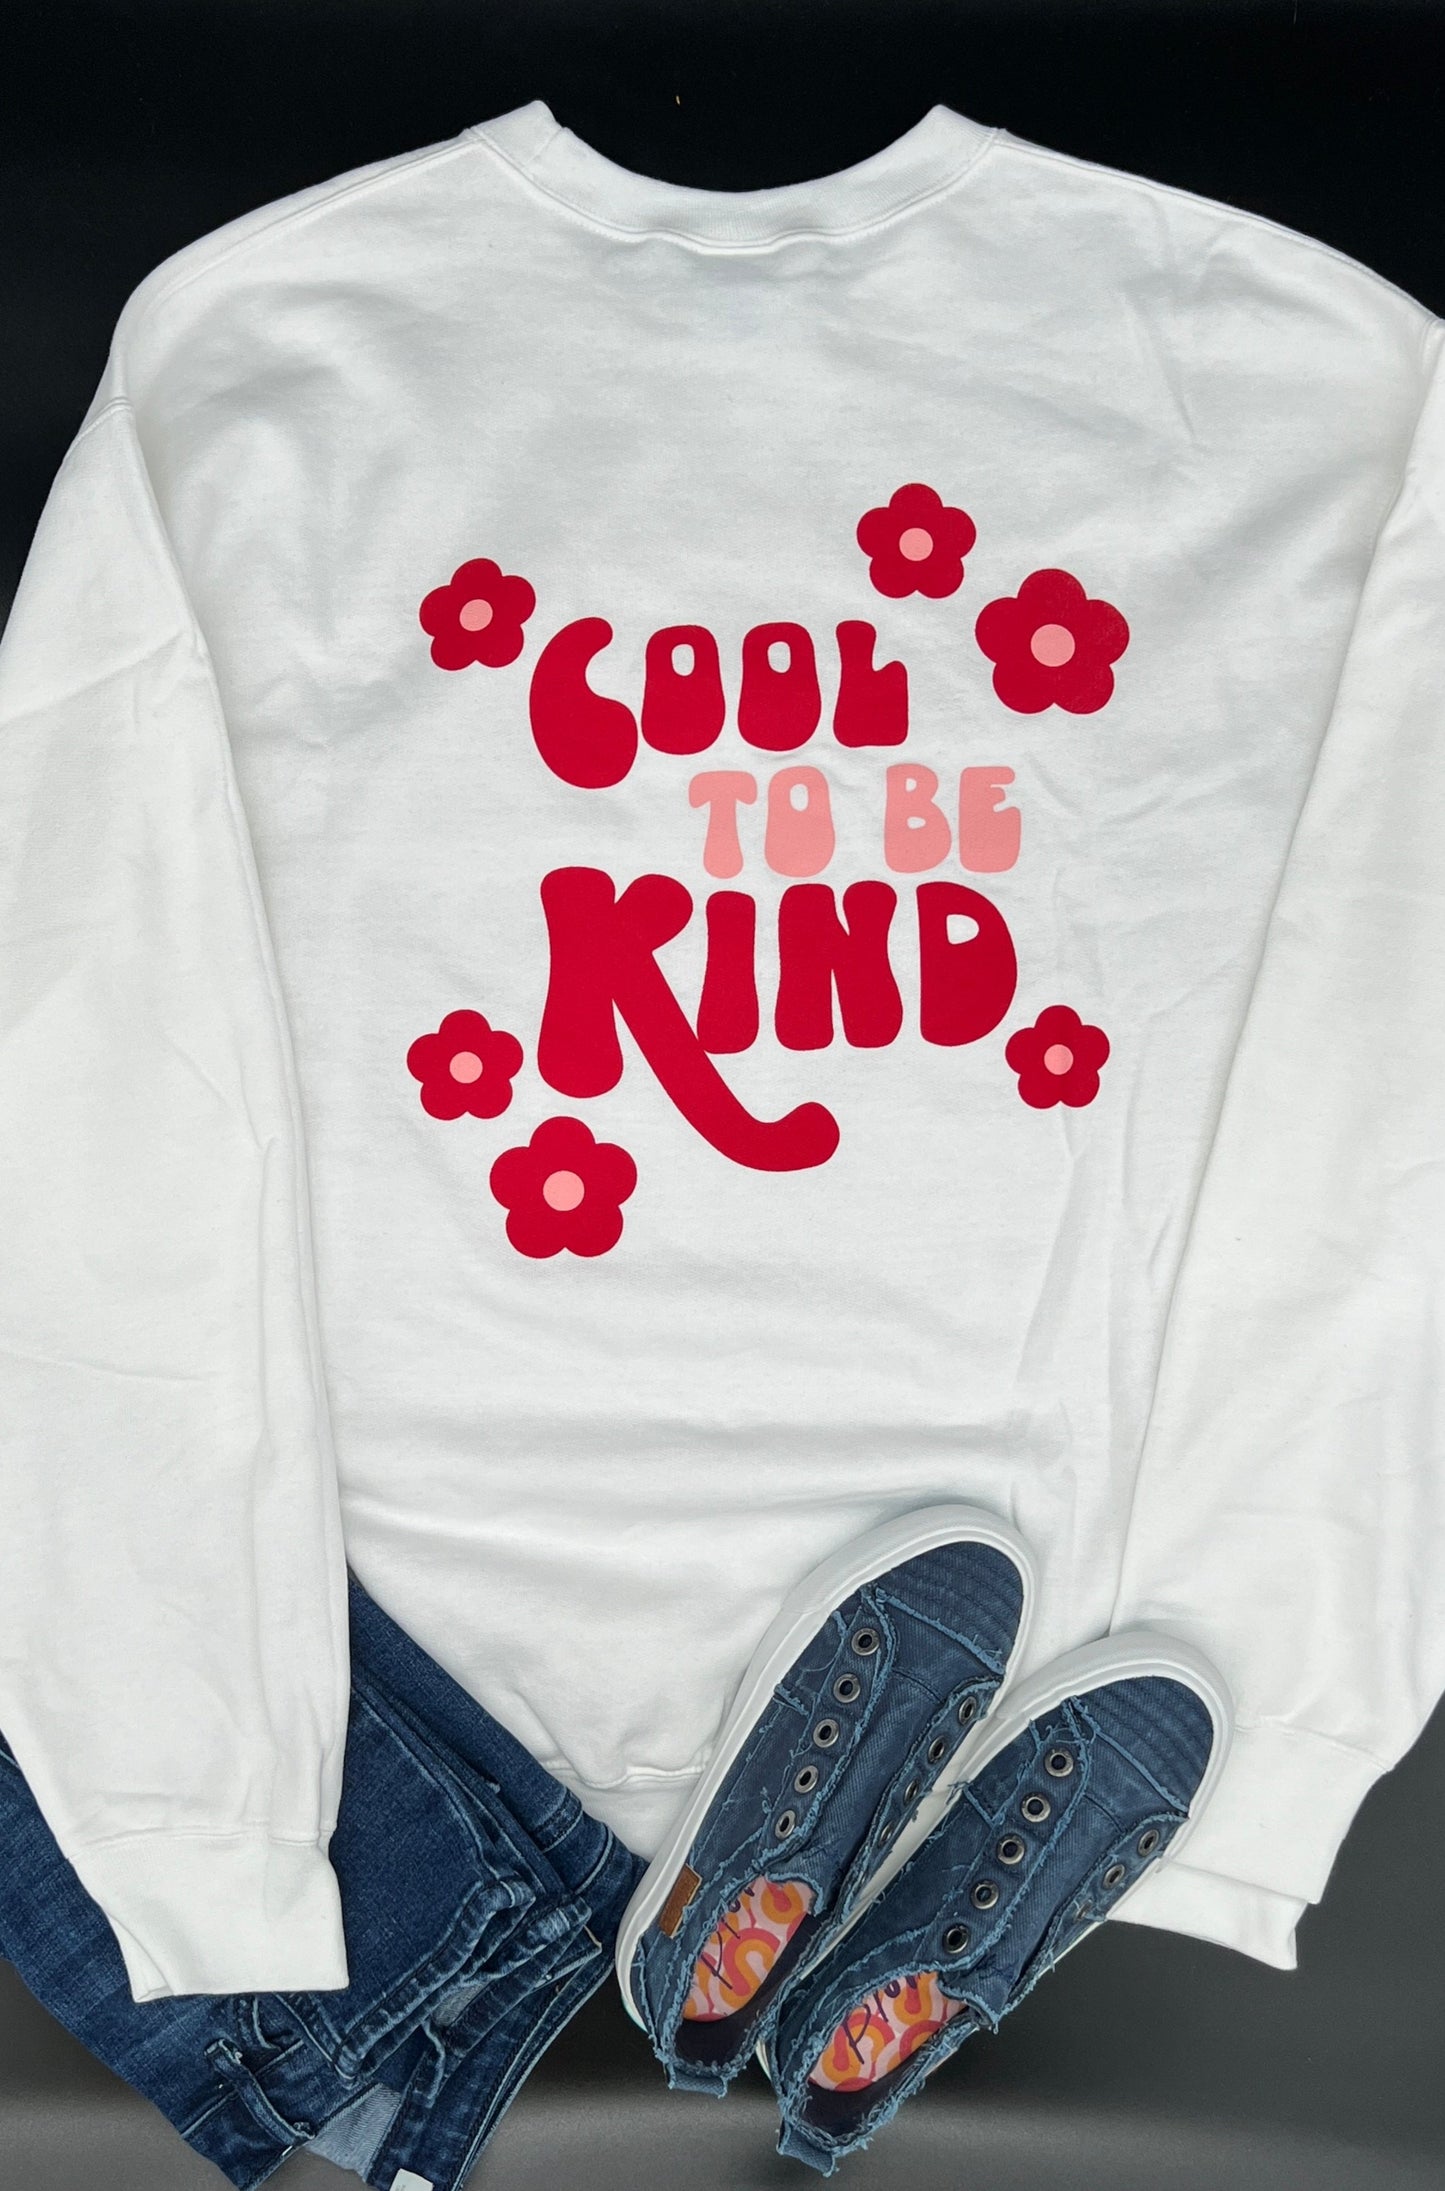 "Cool to Be Kind" Crewneck Sweatshirt, High Quality, Vibrant Colors, Comfortable, Mental Health Messaging, WHITE Sweatshirt